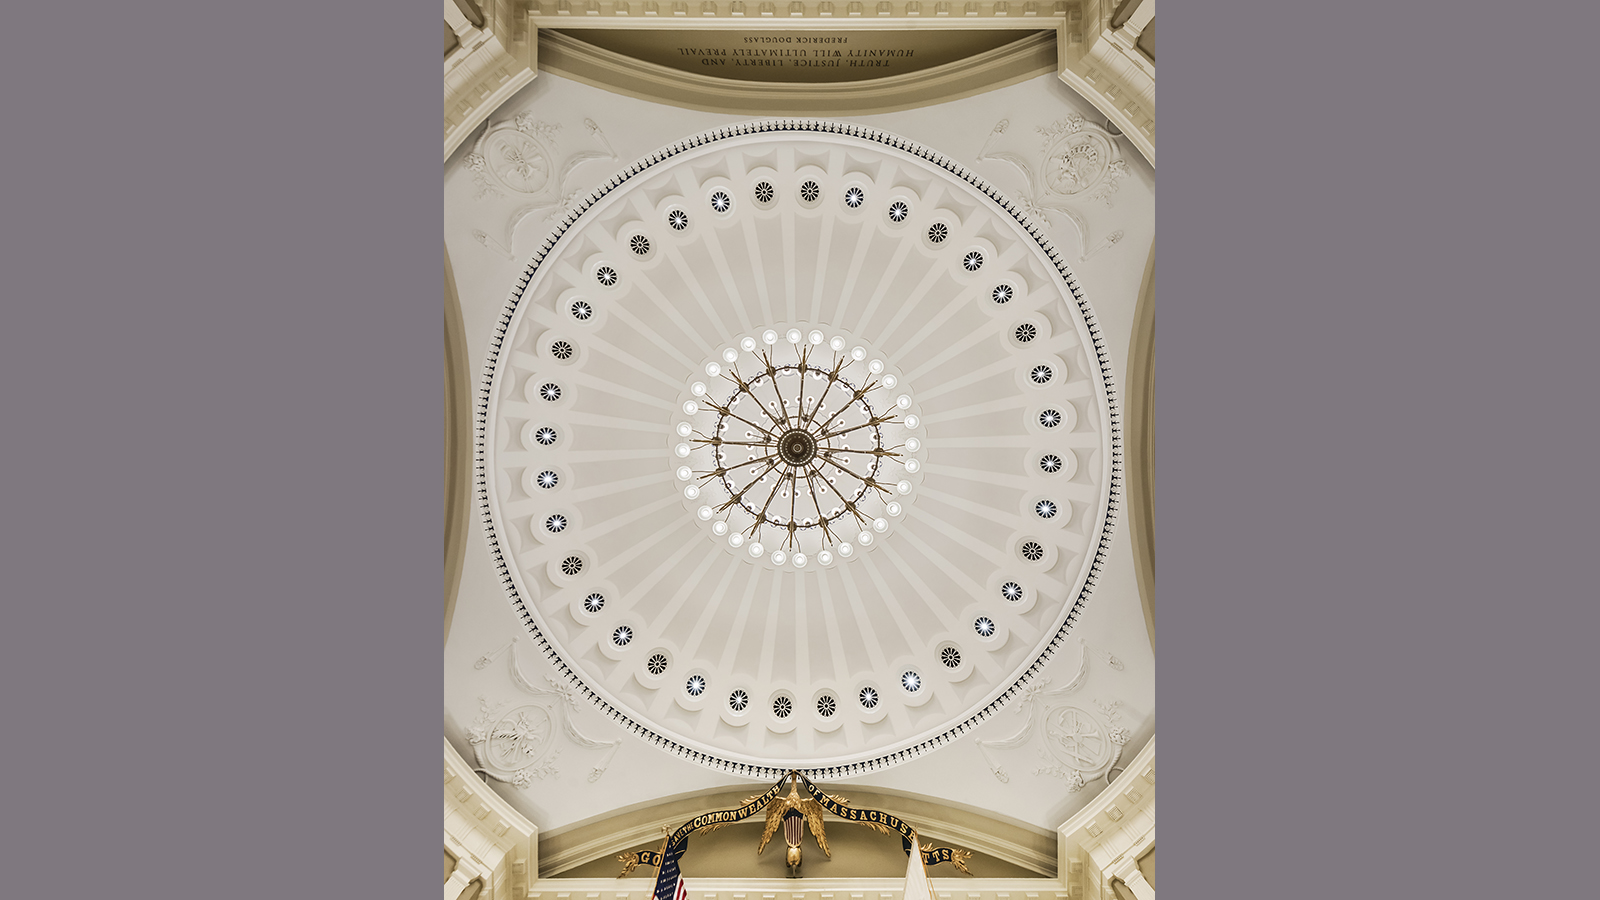 Mass State House Senate Chamber rotunda